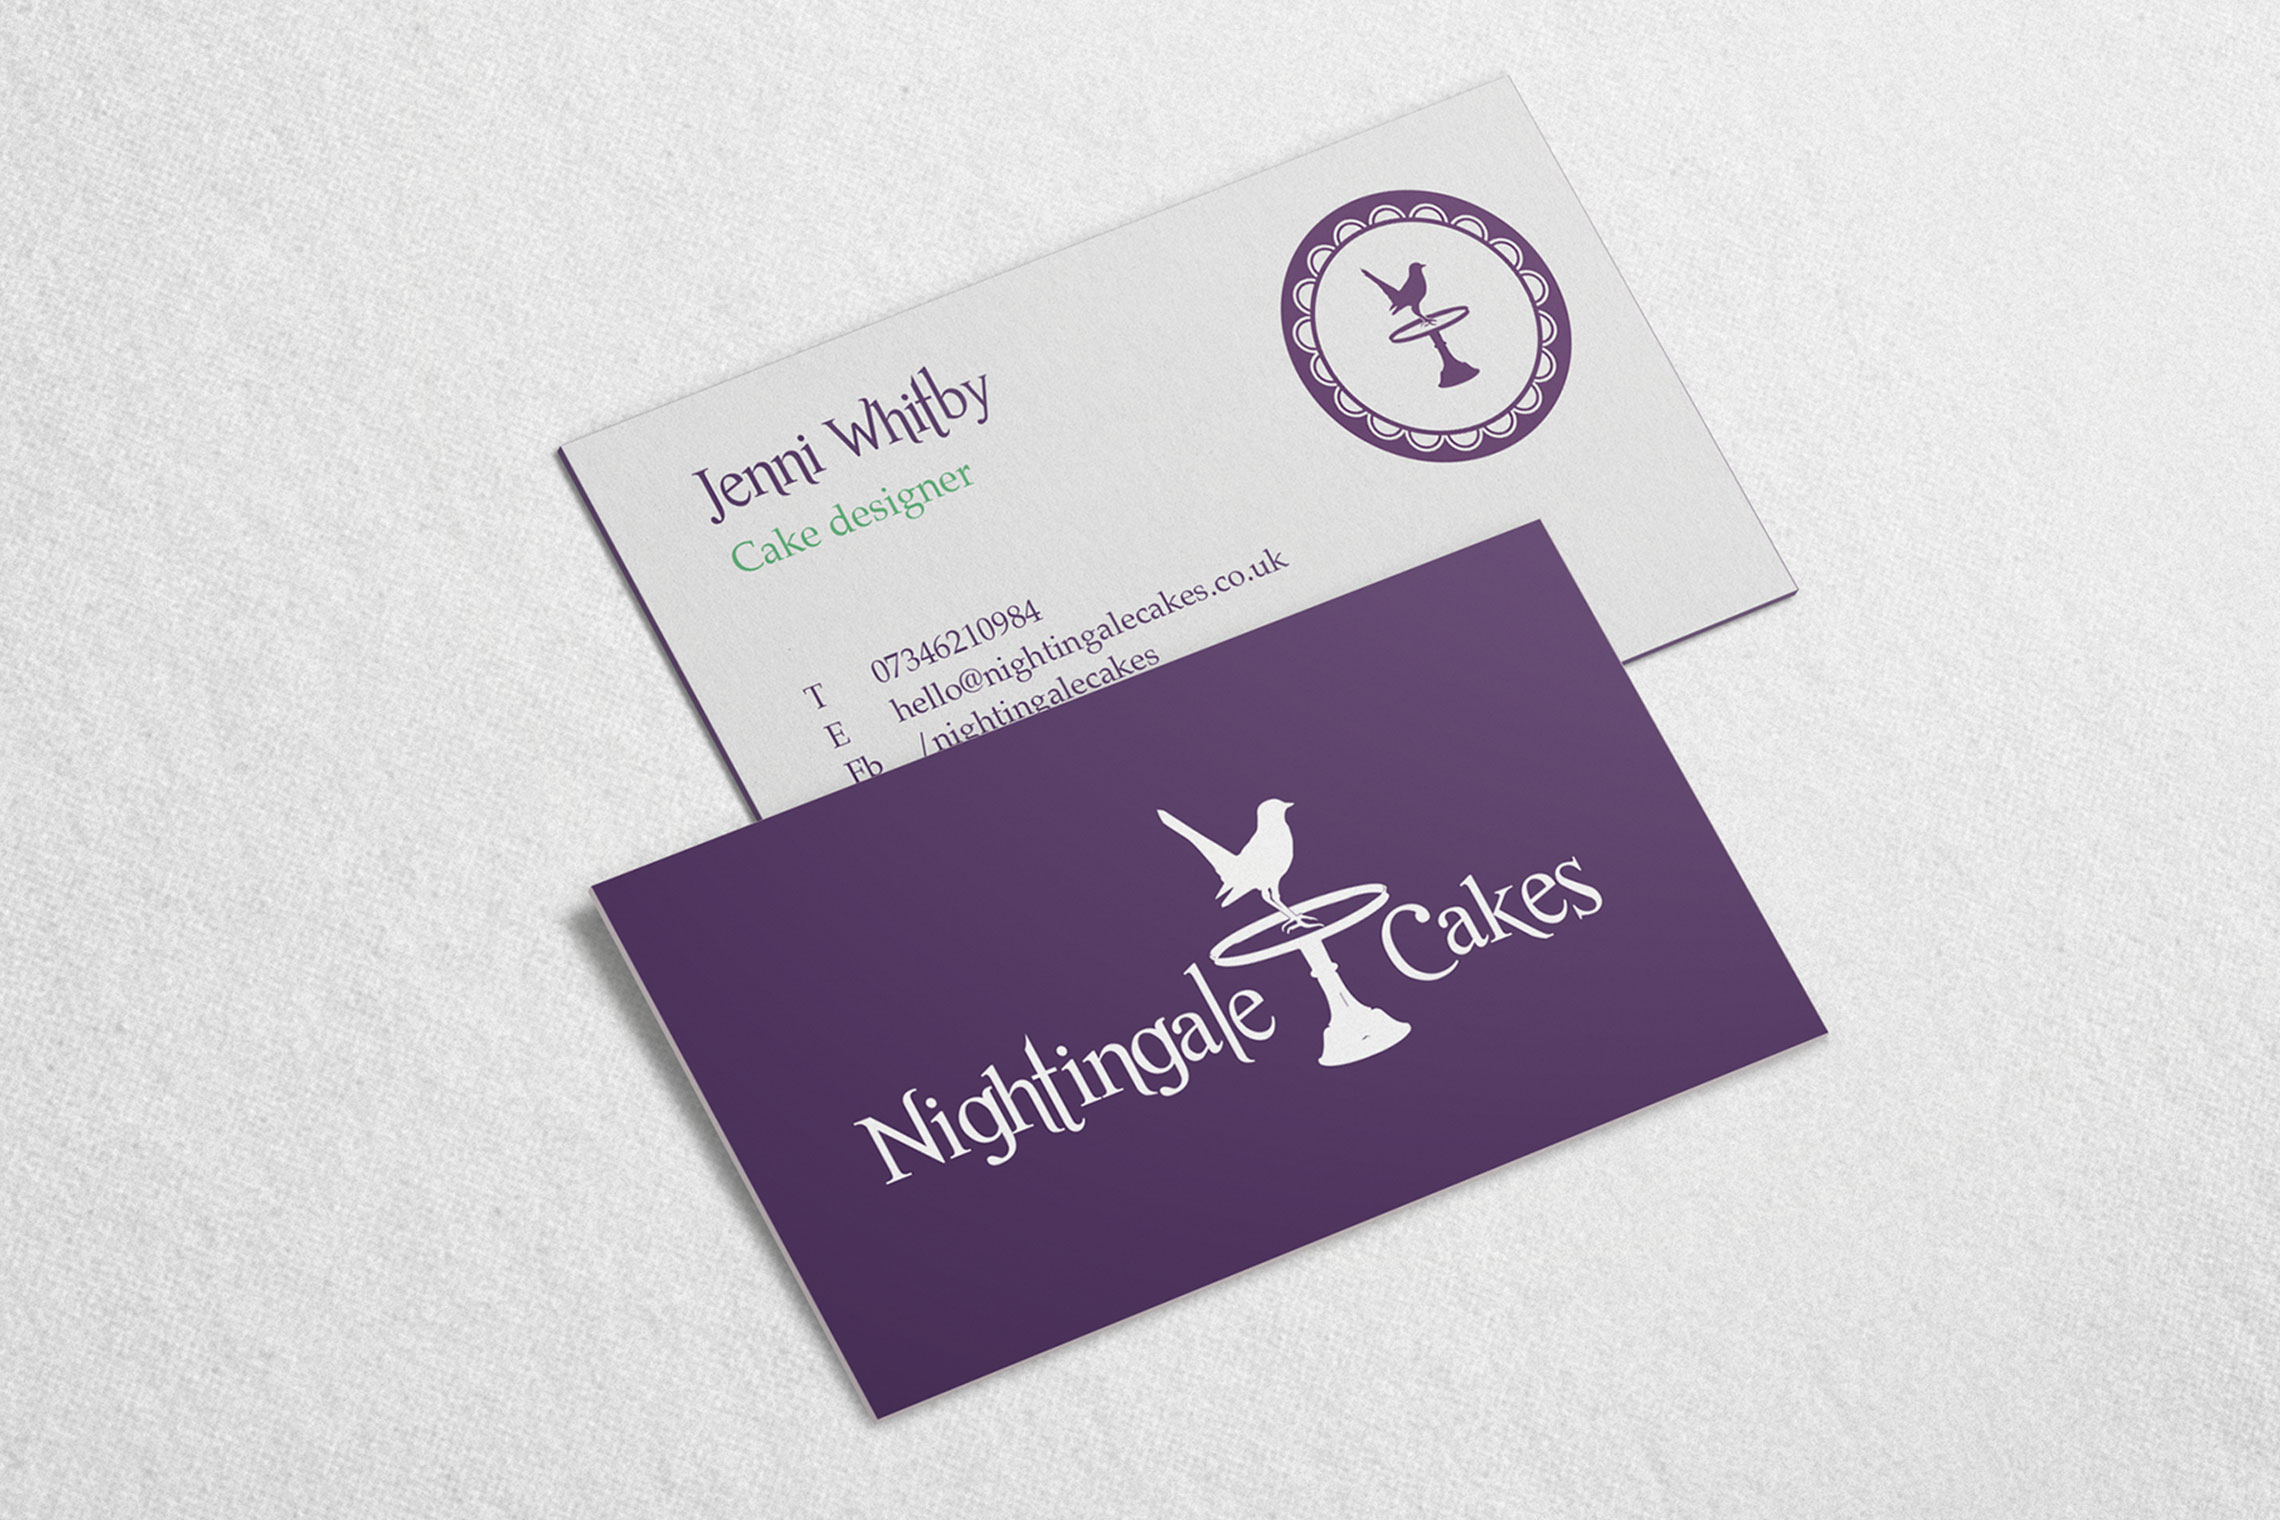 Nightingale Cakes business card design front and back | Made by Miranda | © Miranda Thorne | madebymiranda.co.uk